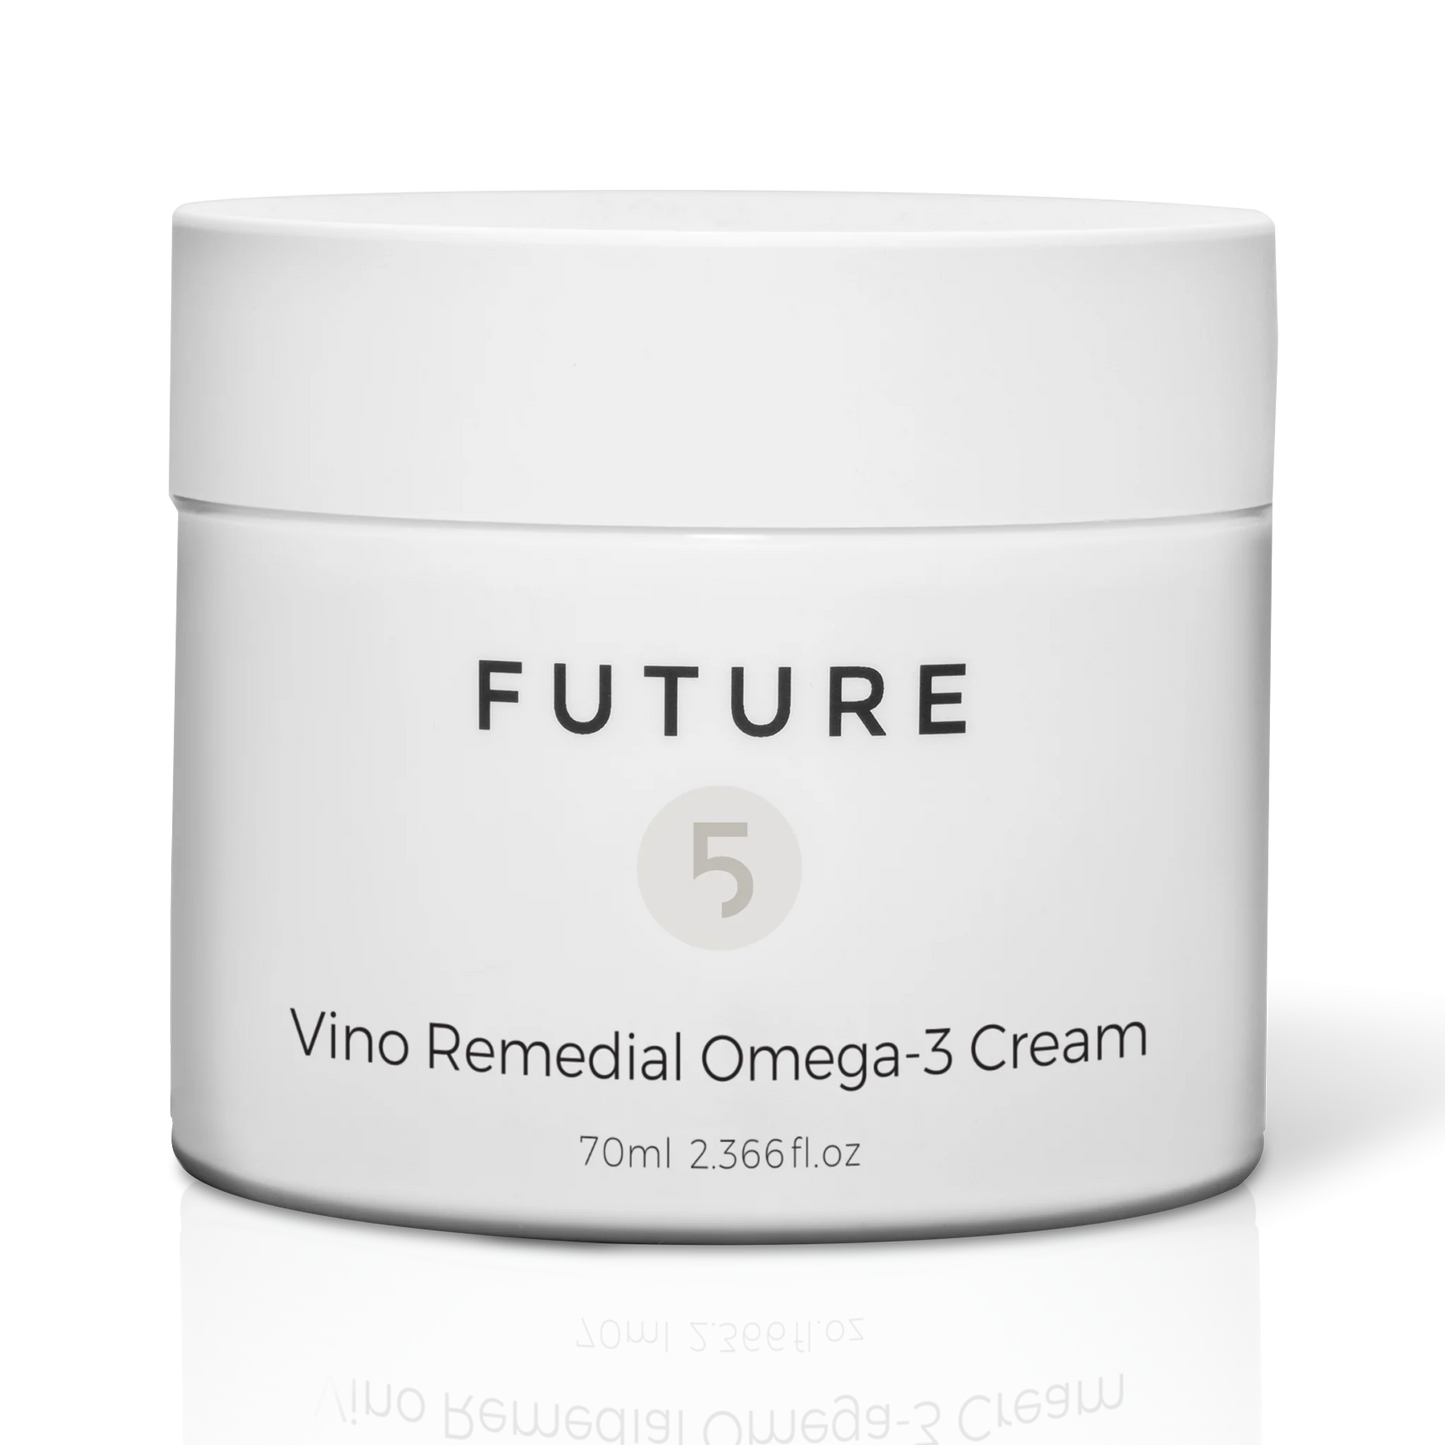 Vino Remedial Omega-3 Cream